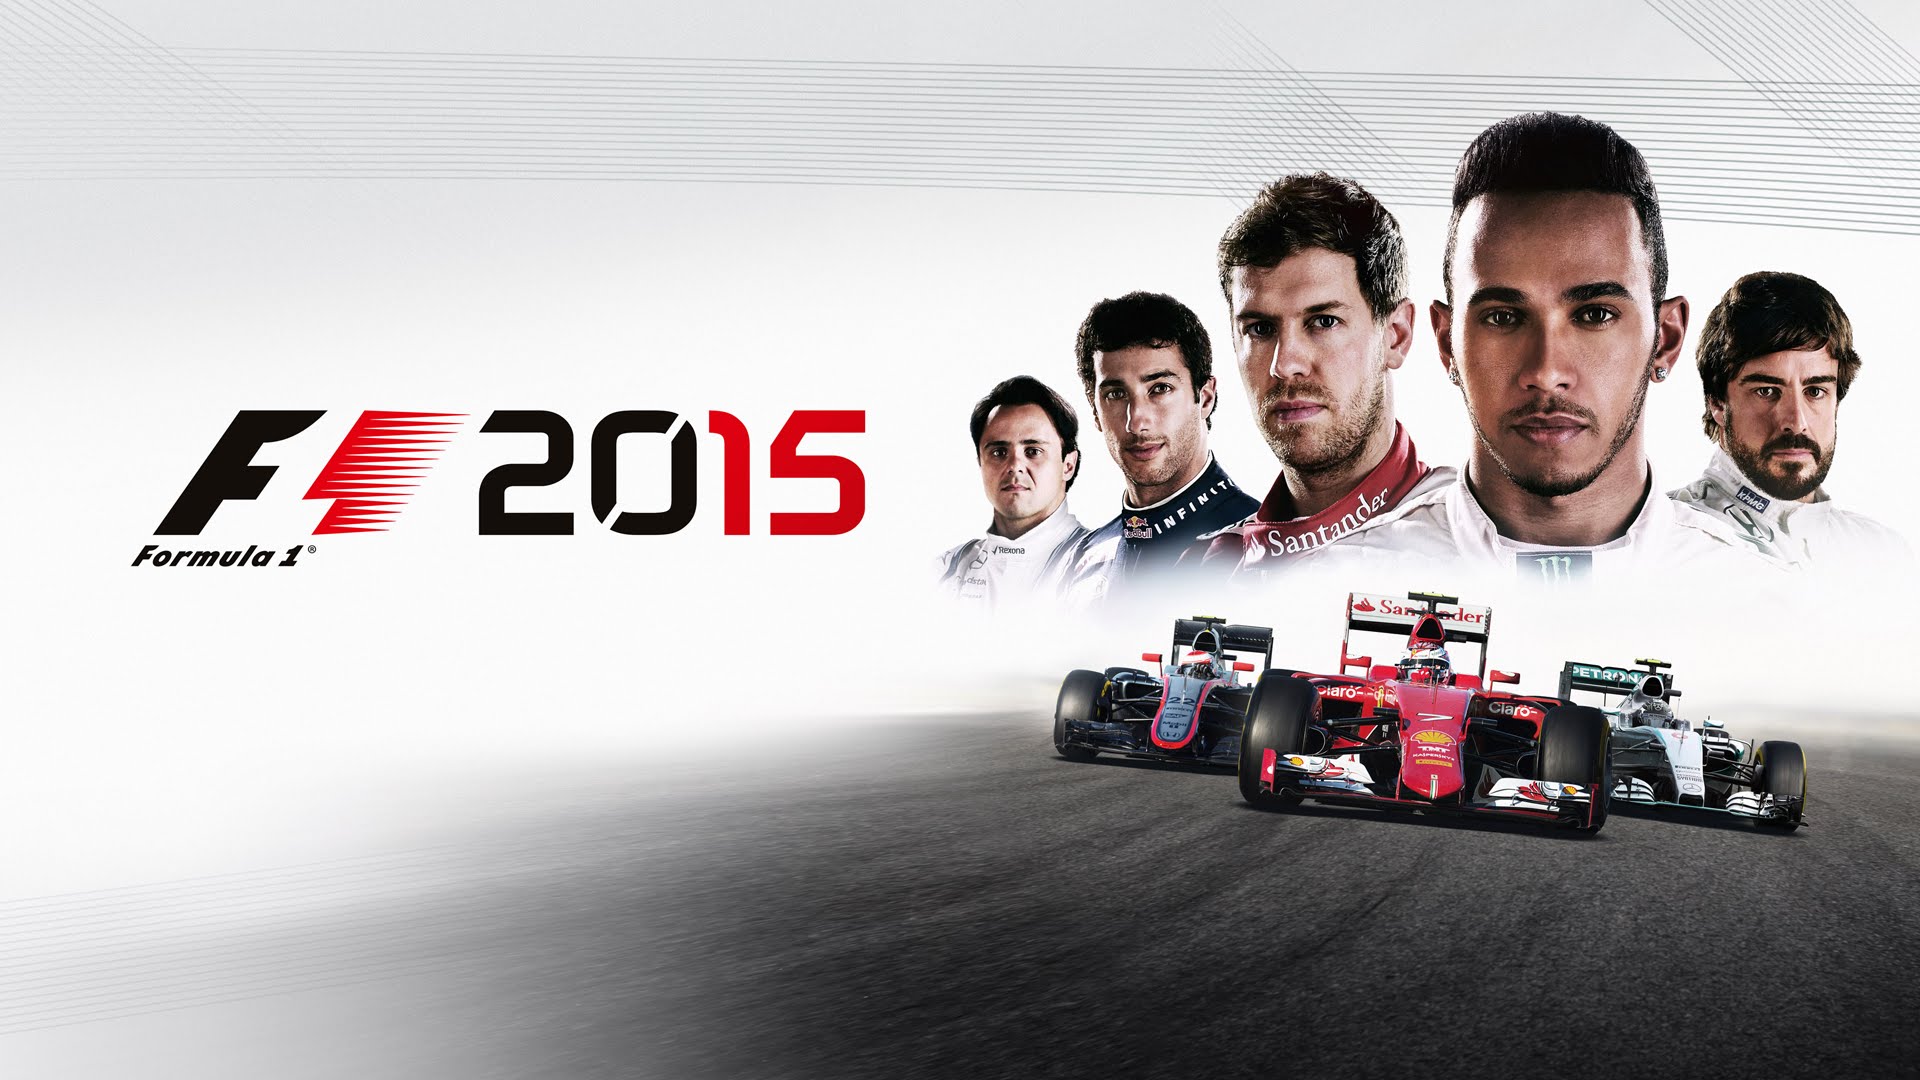 2015. F1 2015. F1 2015 Xbox 360. F1 2015 ps3. Формула 1 2015.